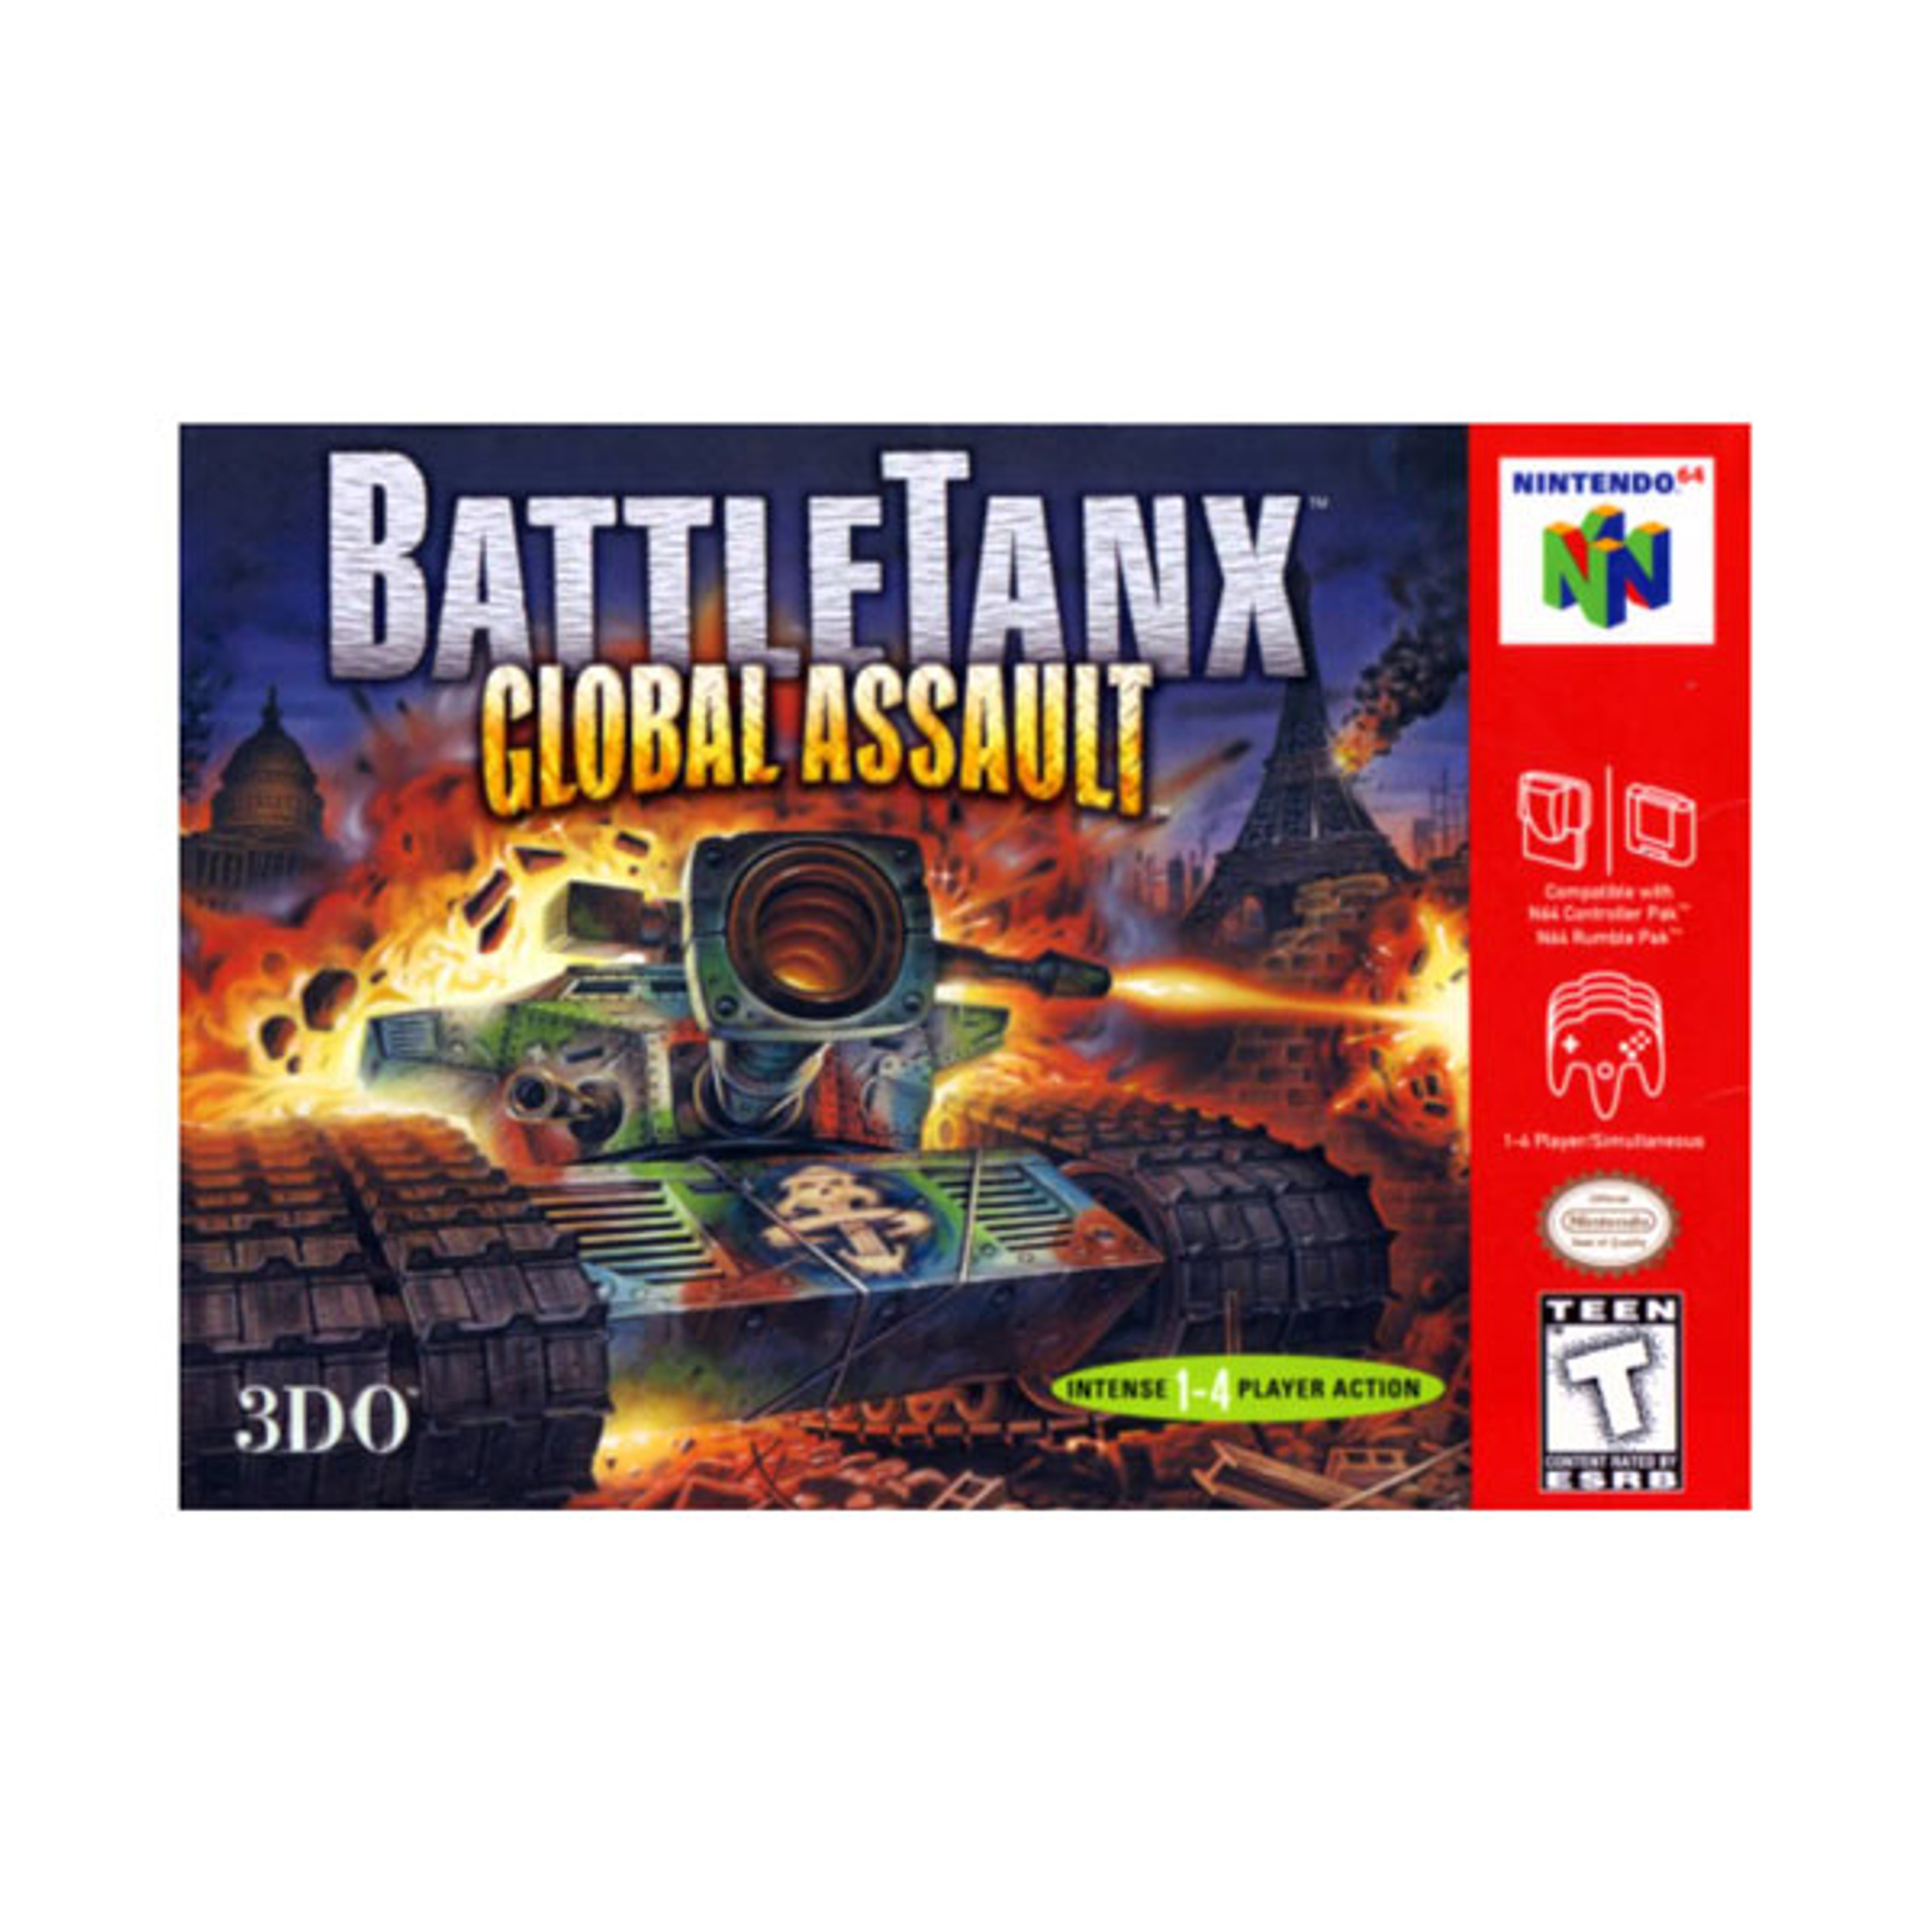 battle tanks global assault n64